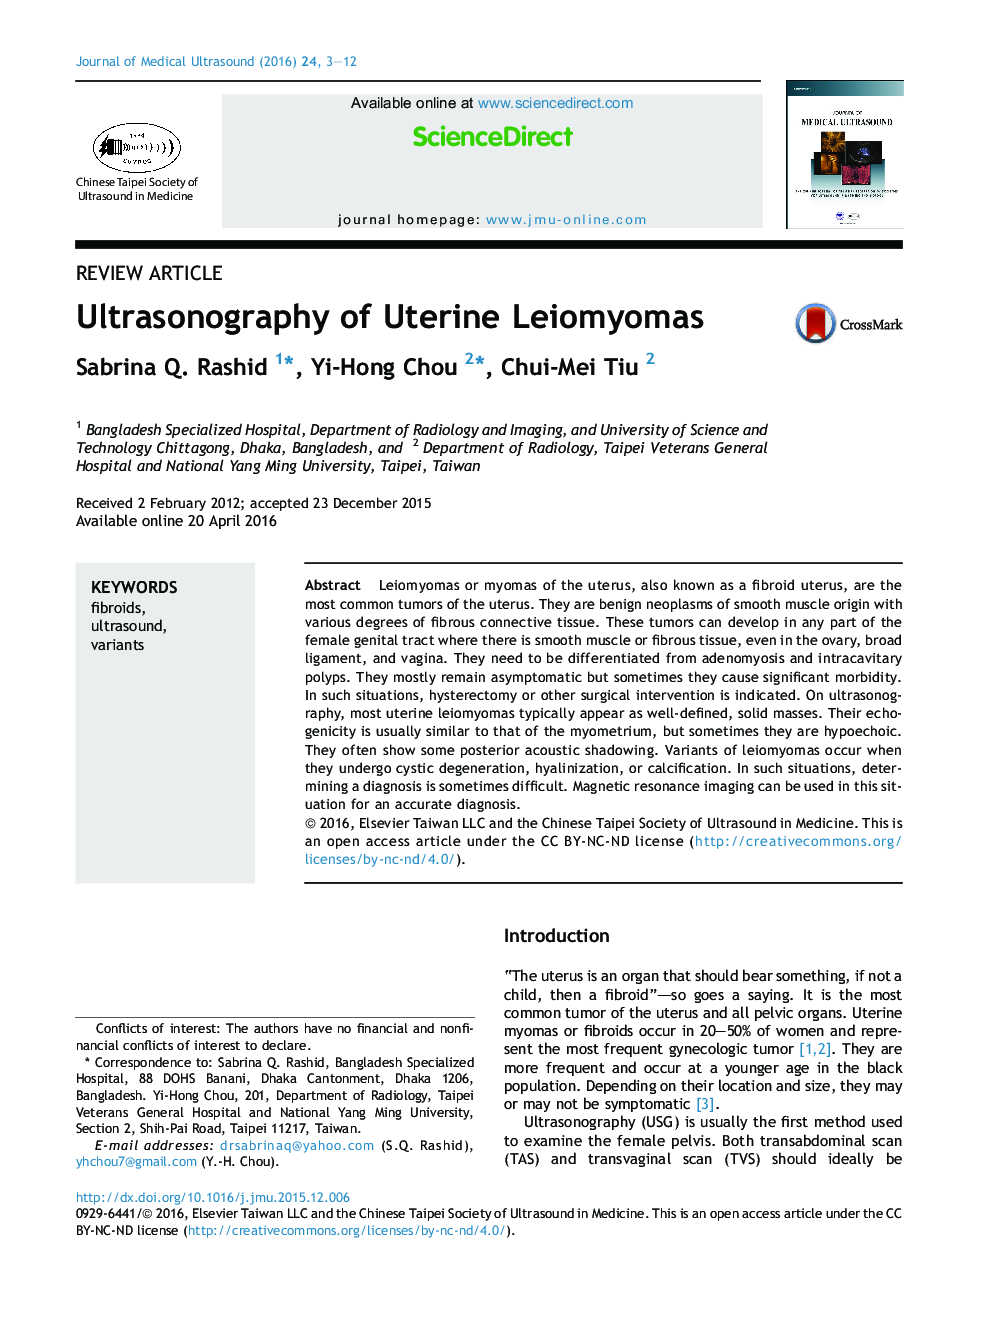 Ultrasonography of Uterine Leiomyomas 